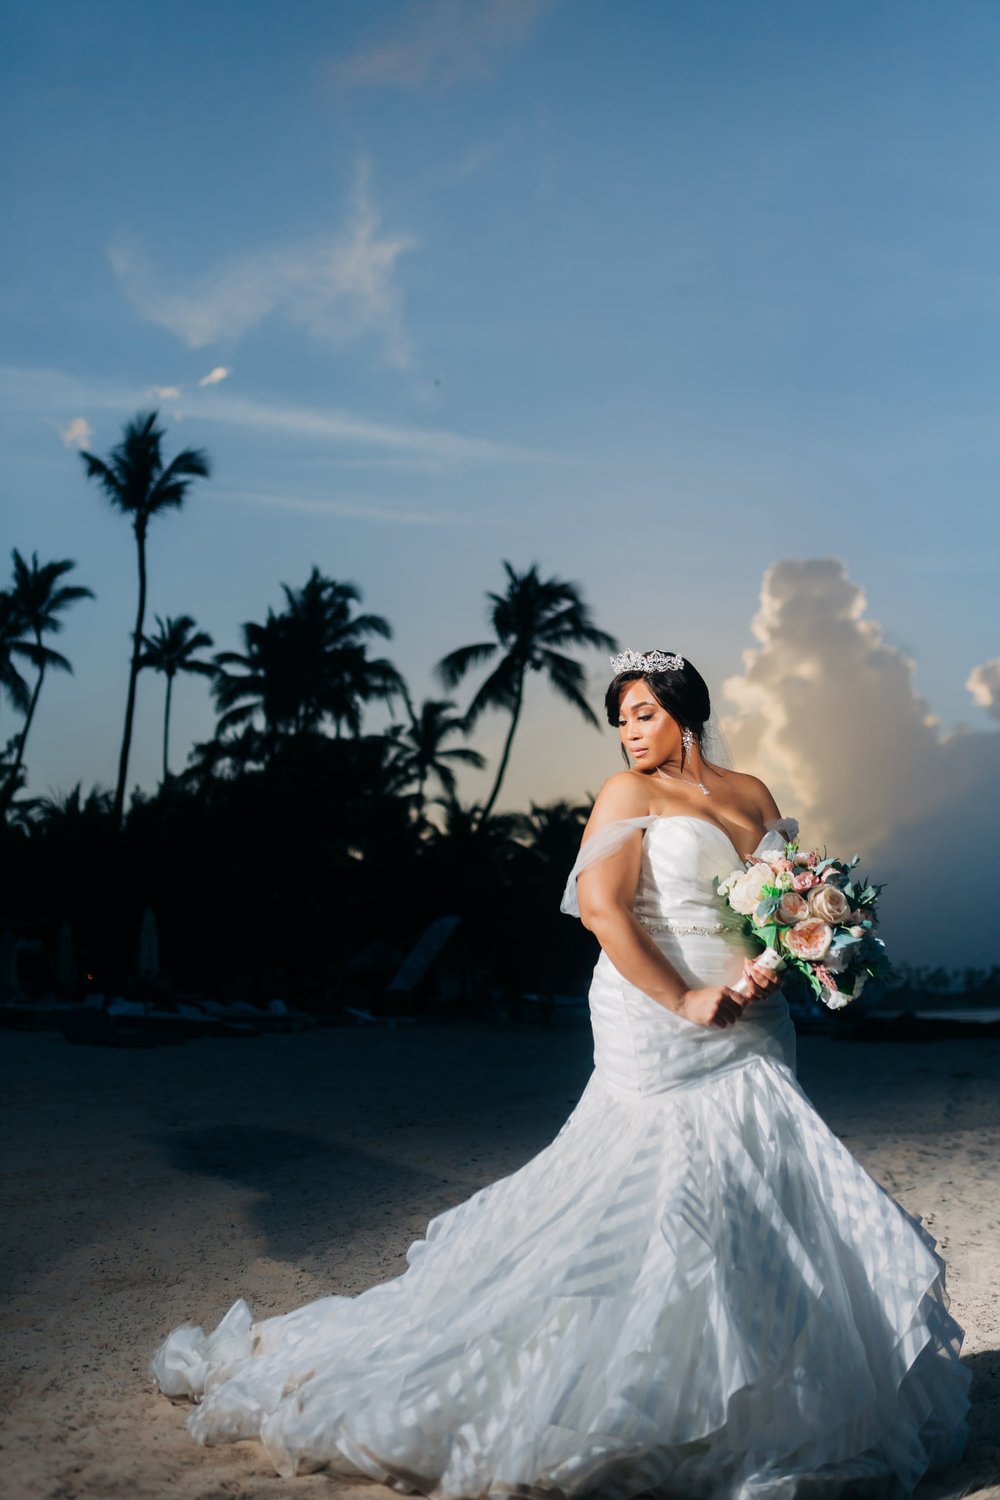 destibride-nicole-how-to-plan-a-destination-wedding-in-punta-cana-dominican-republic-jellyfish-restaurant-royalton-bavaro-resort-black-destination-bride-desti-tv-desti-guide-to-destination-weddings-2021-beach-bride-sunset1.jpg